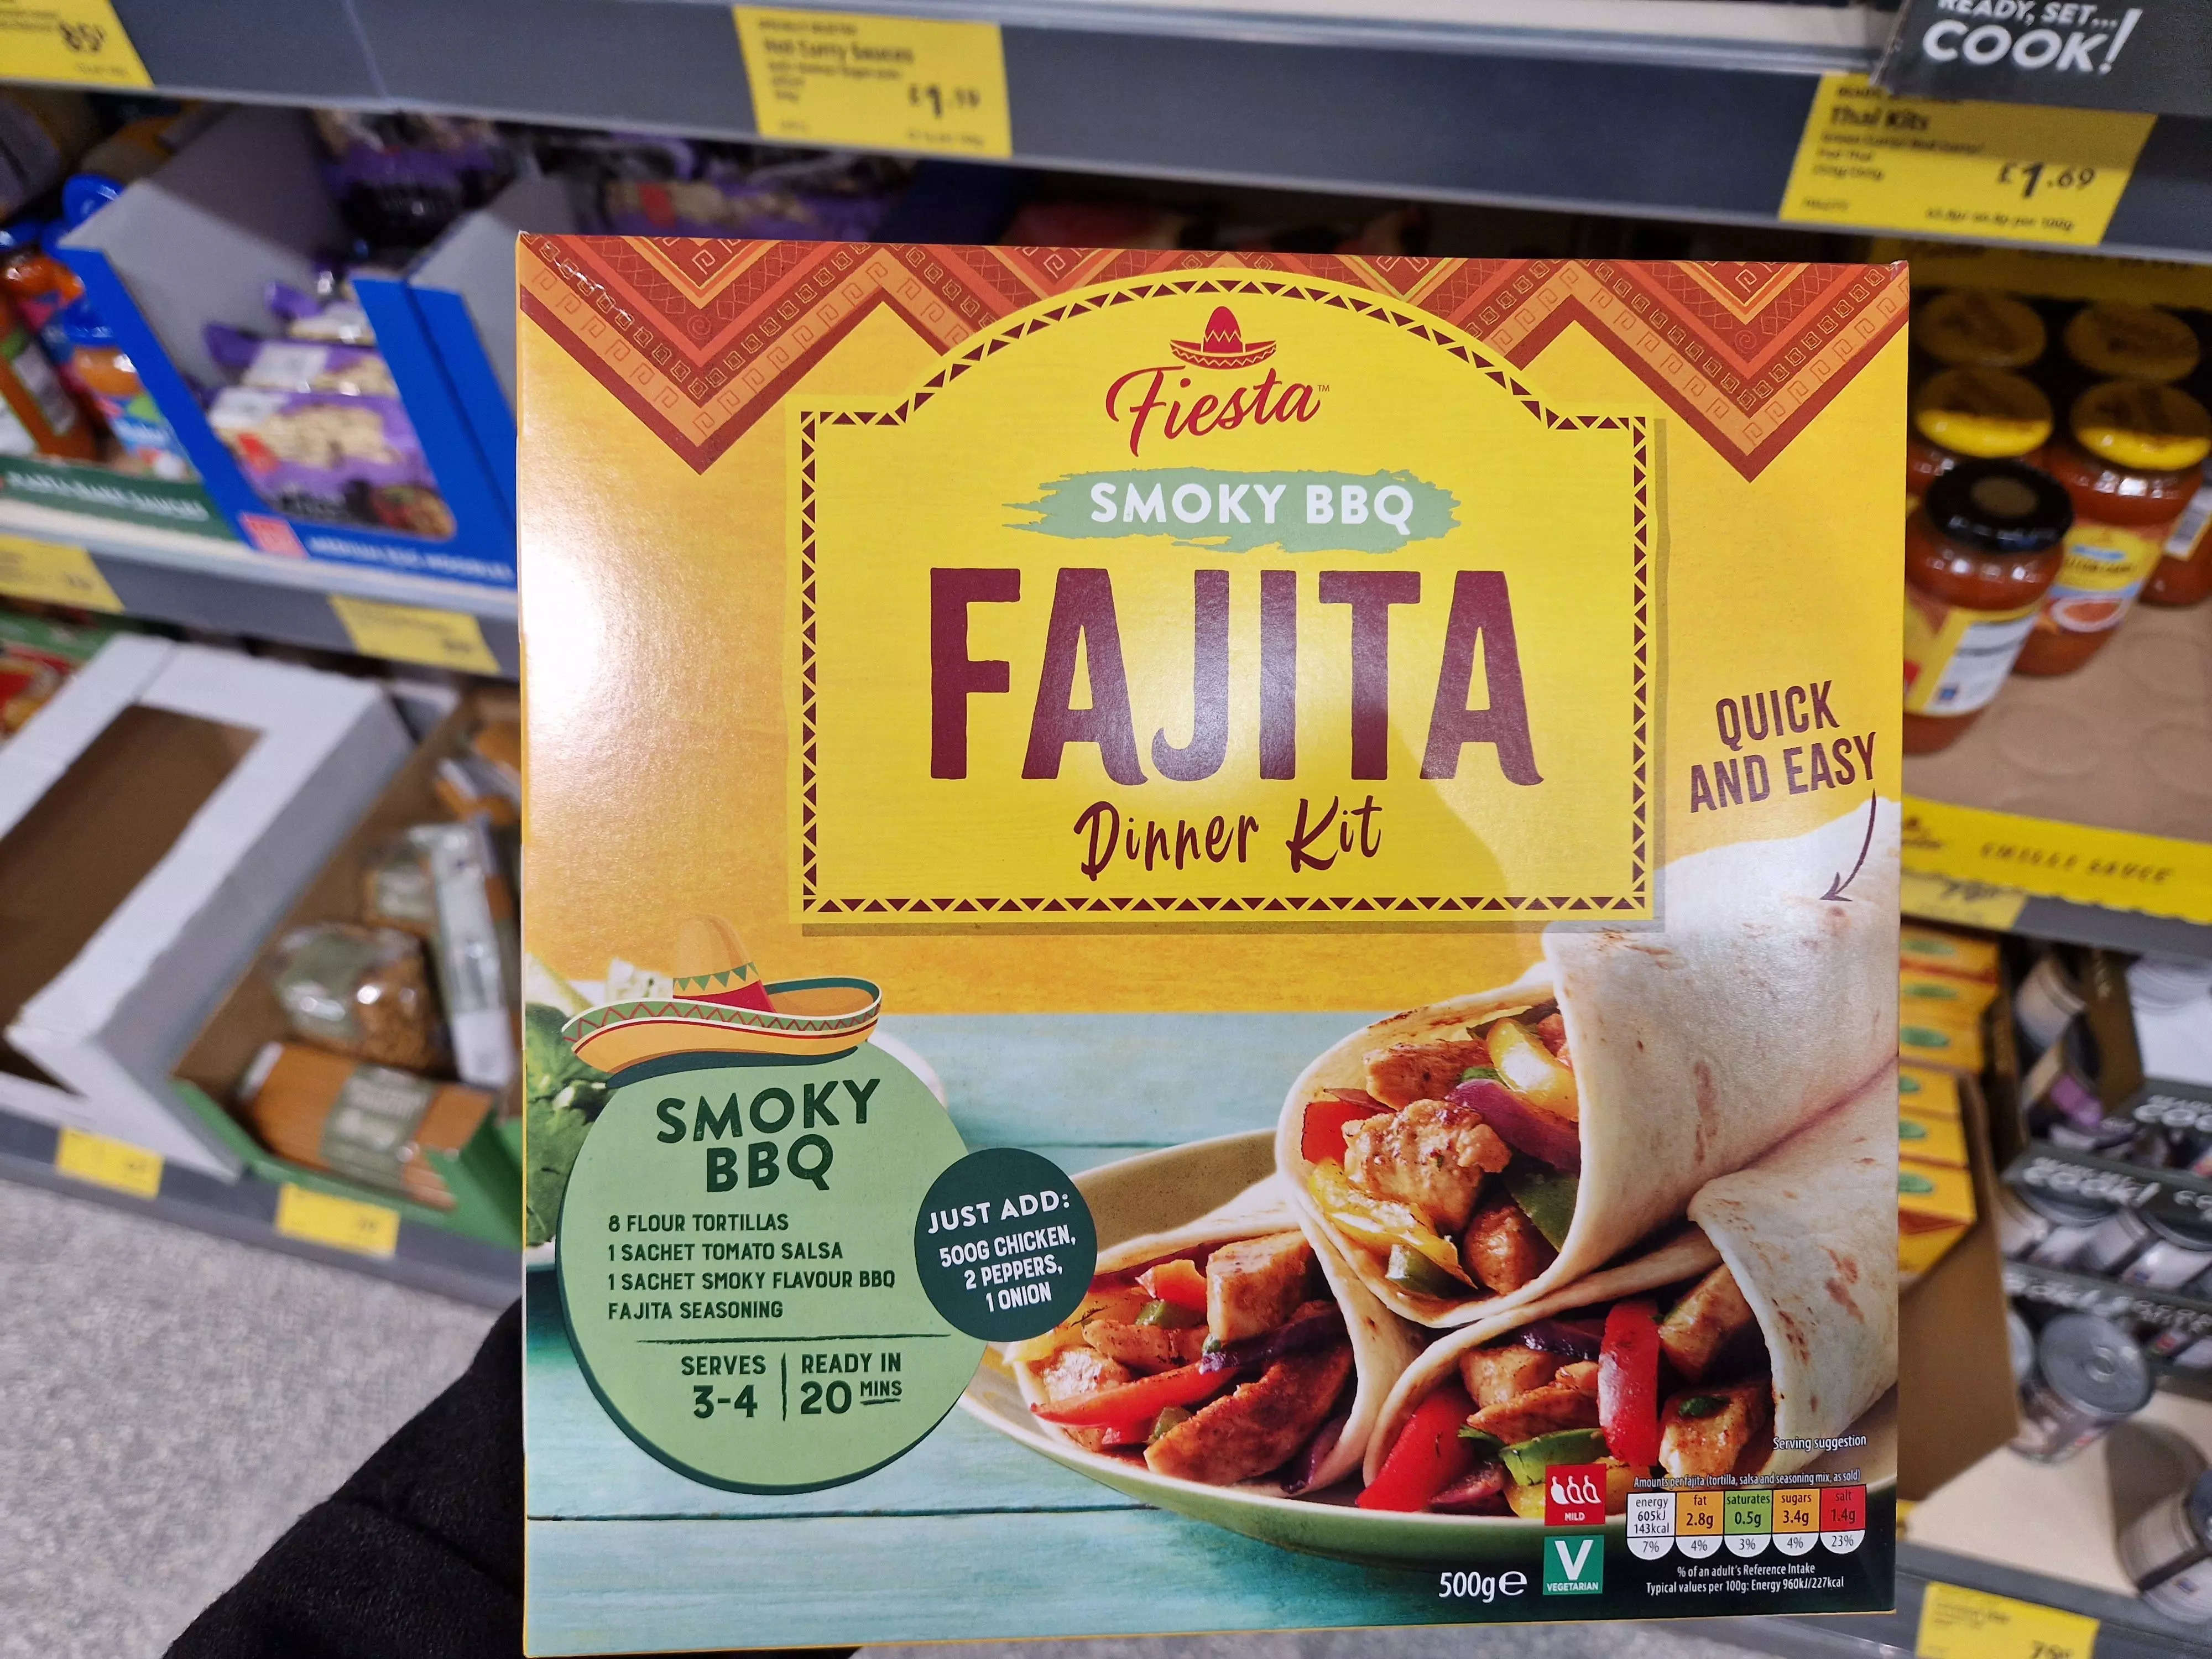 The writer holds a Fiesta smoky BBQ fajita dinner kit